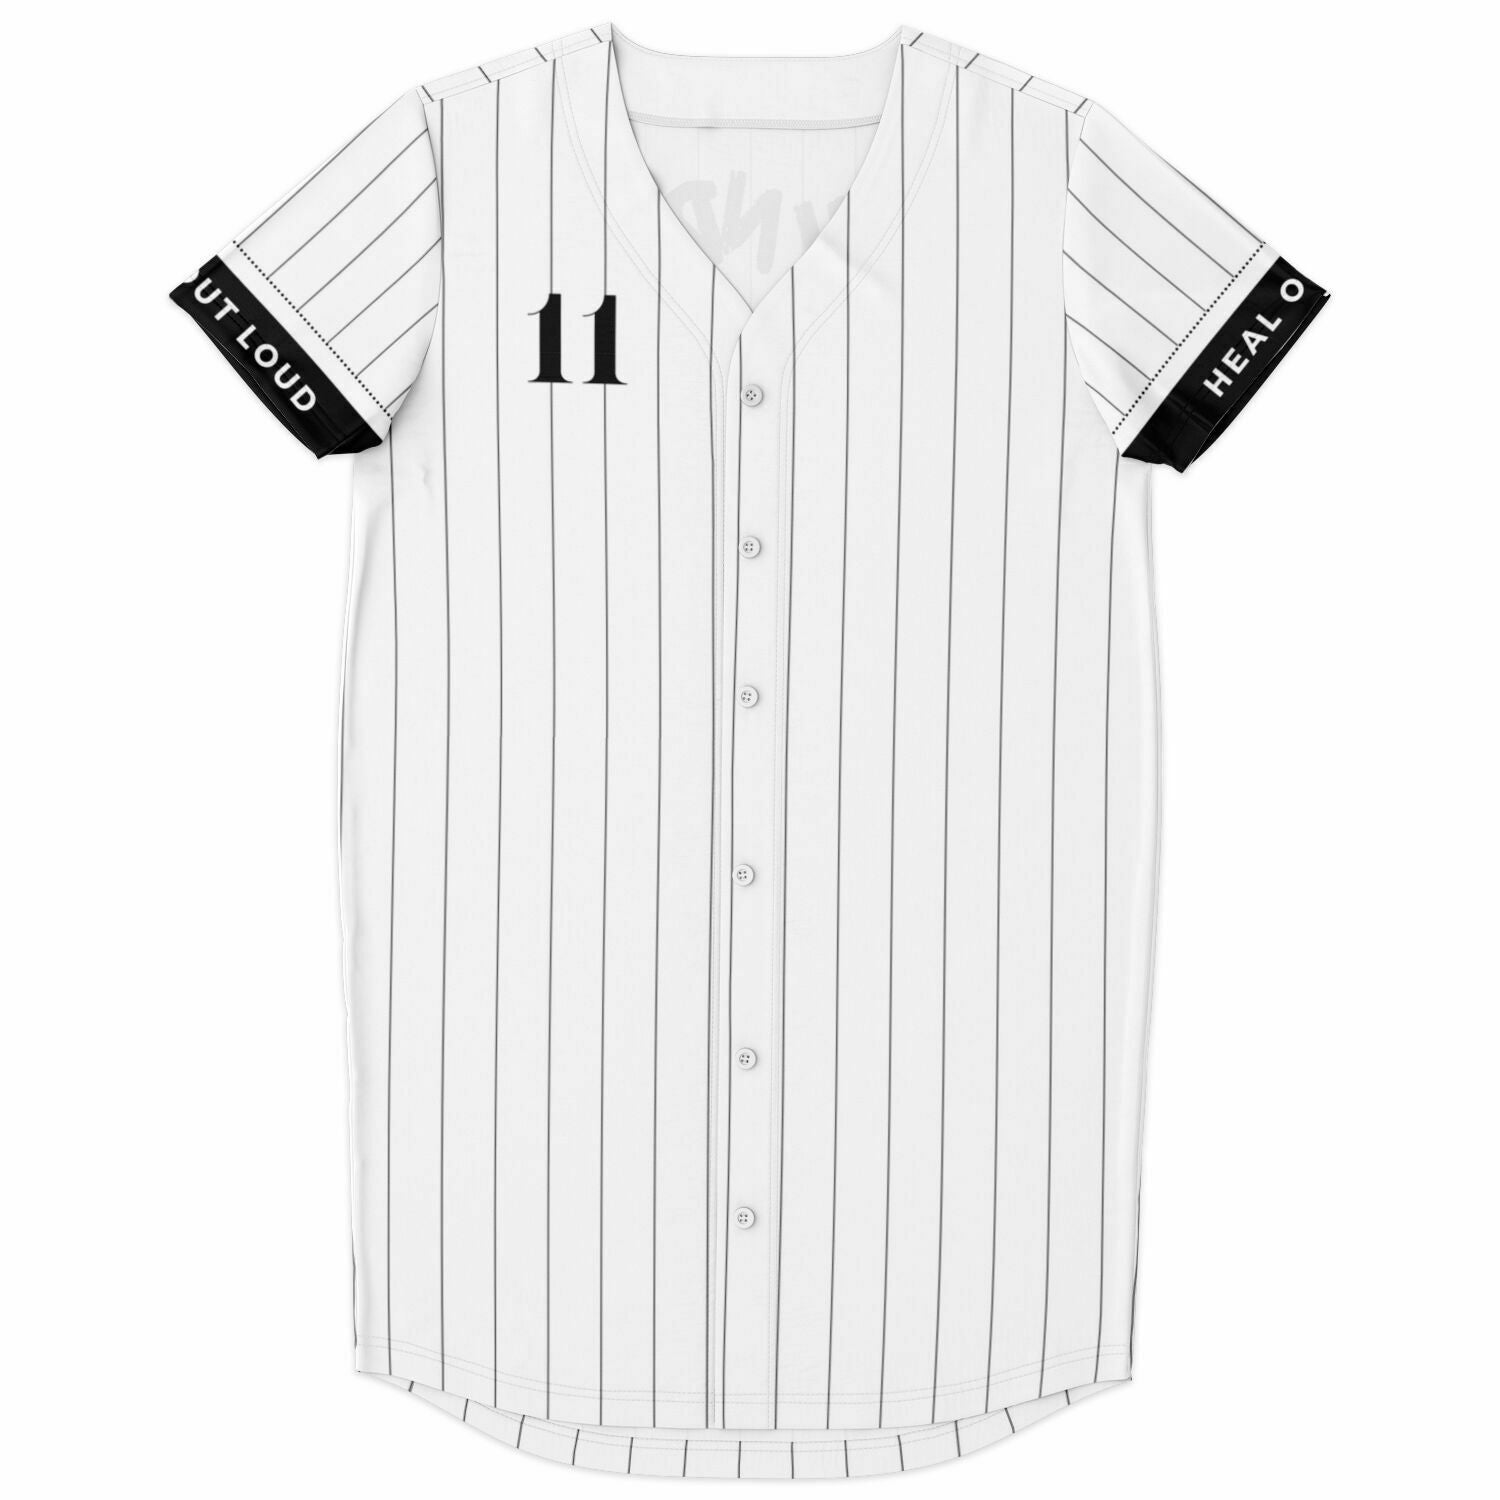 white baseball jersey outfit